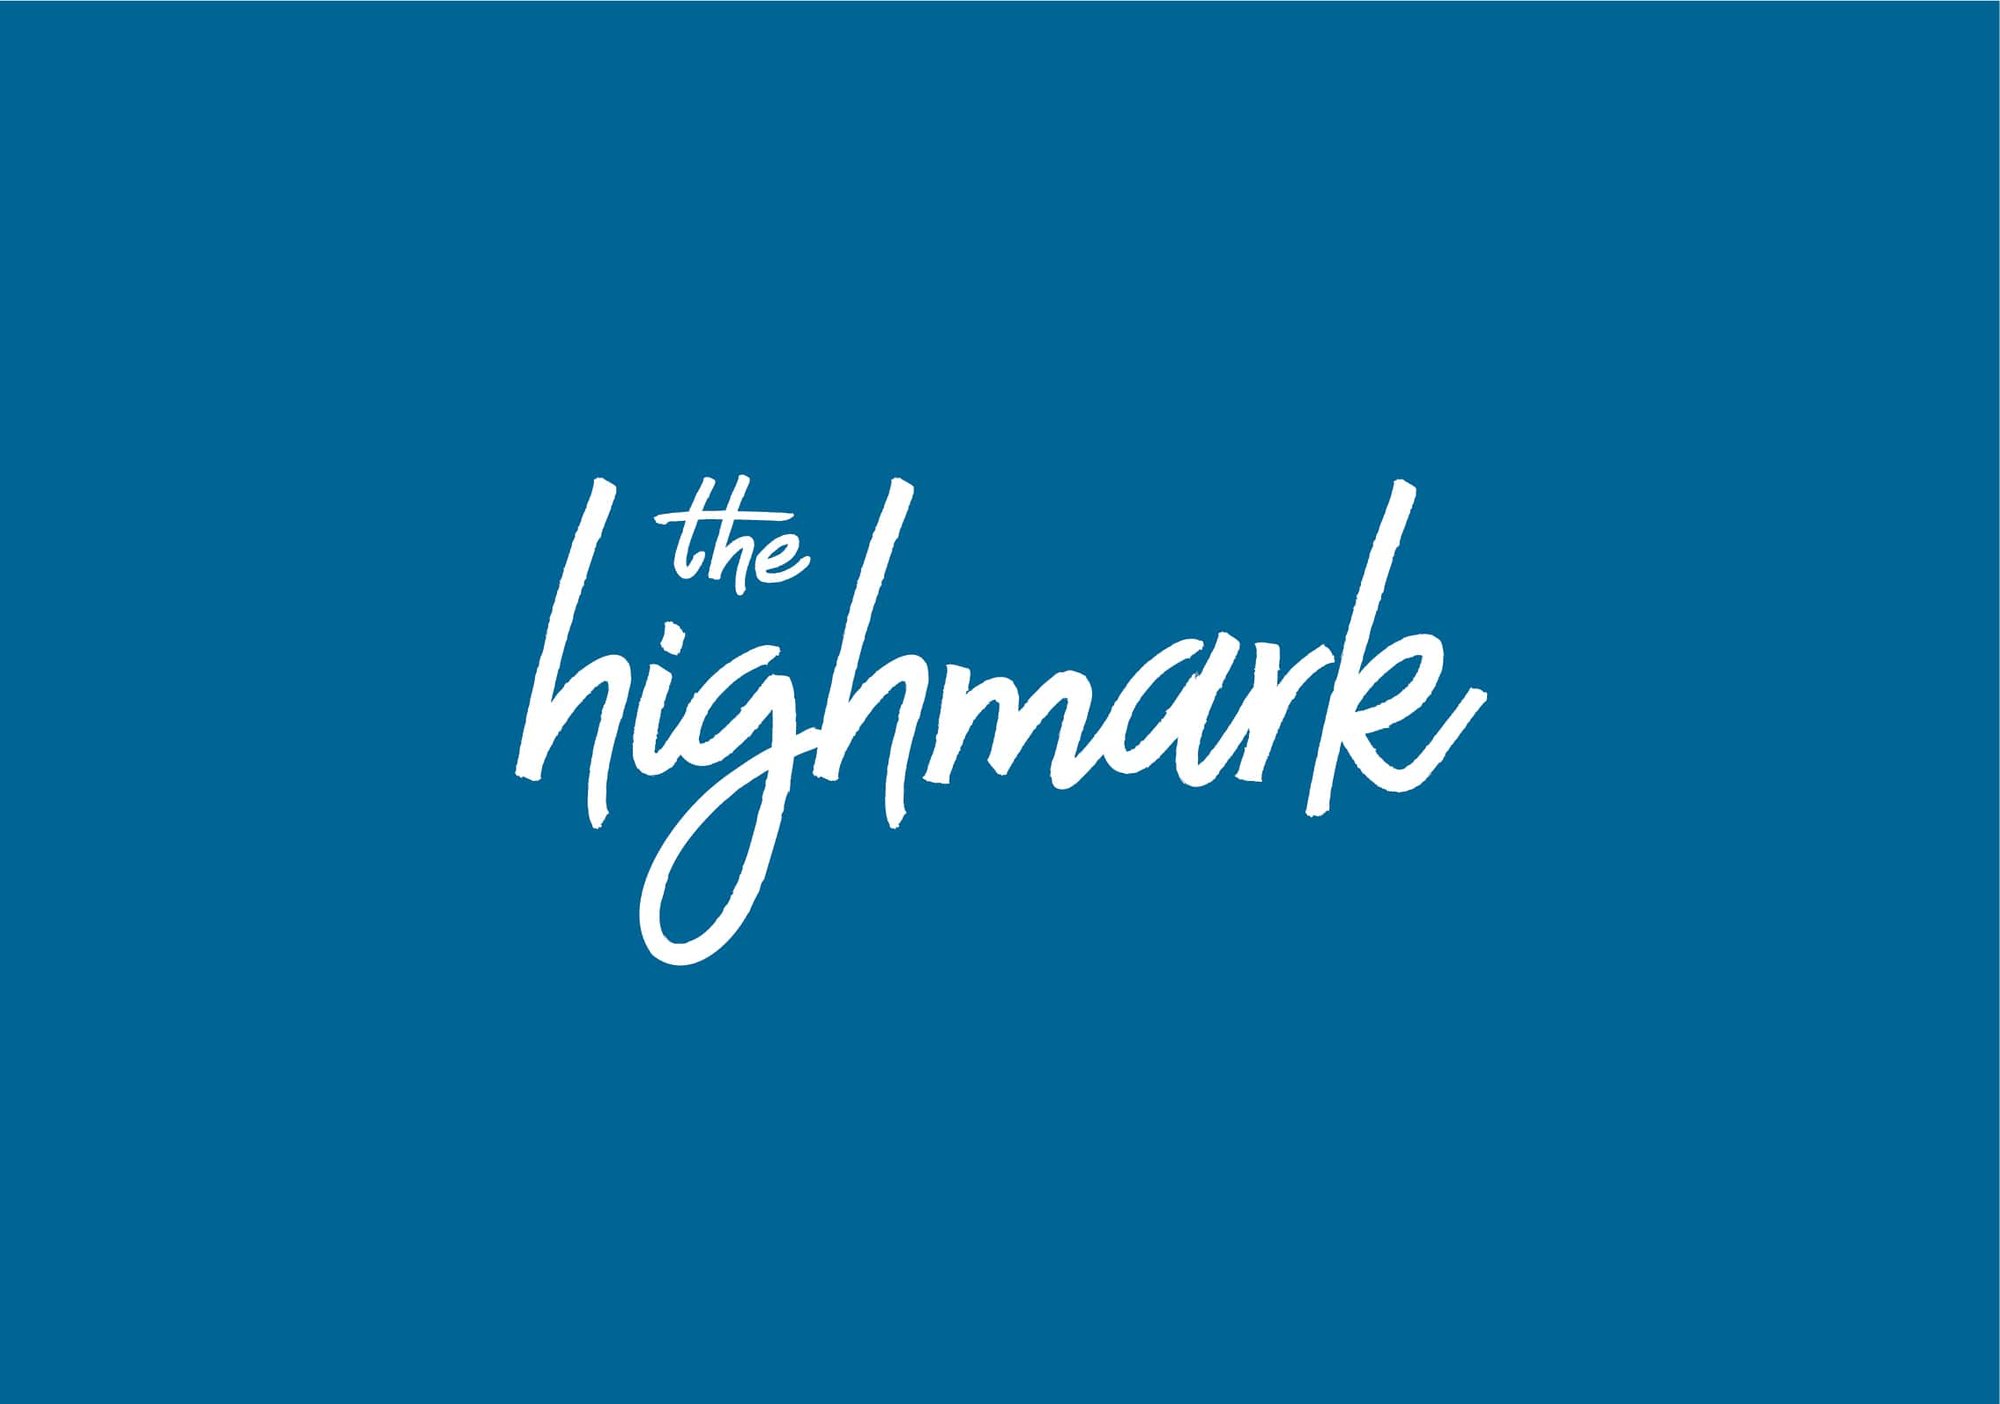 The Highmark logo in blue